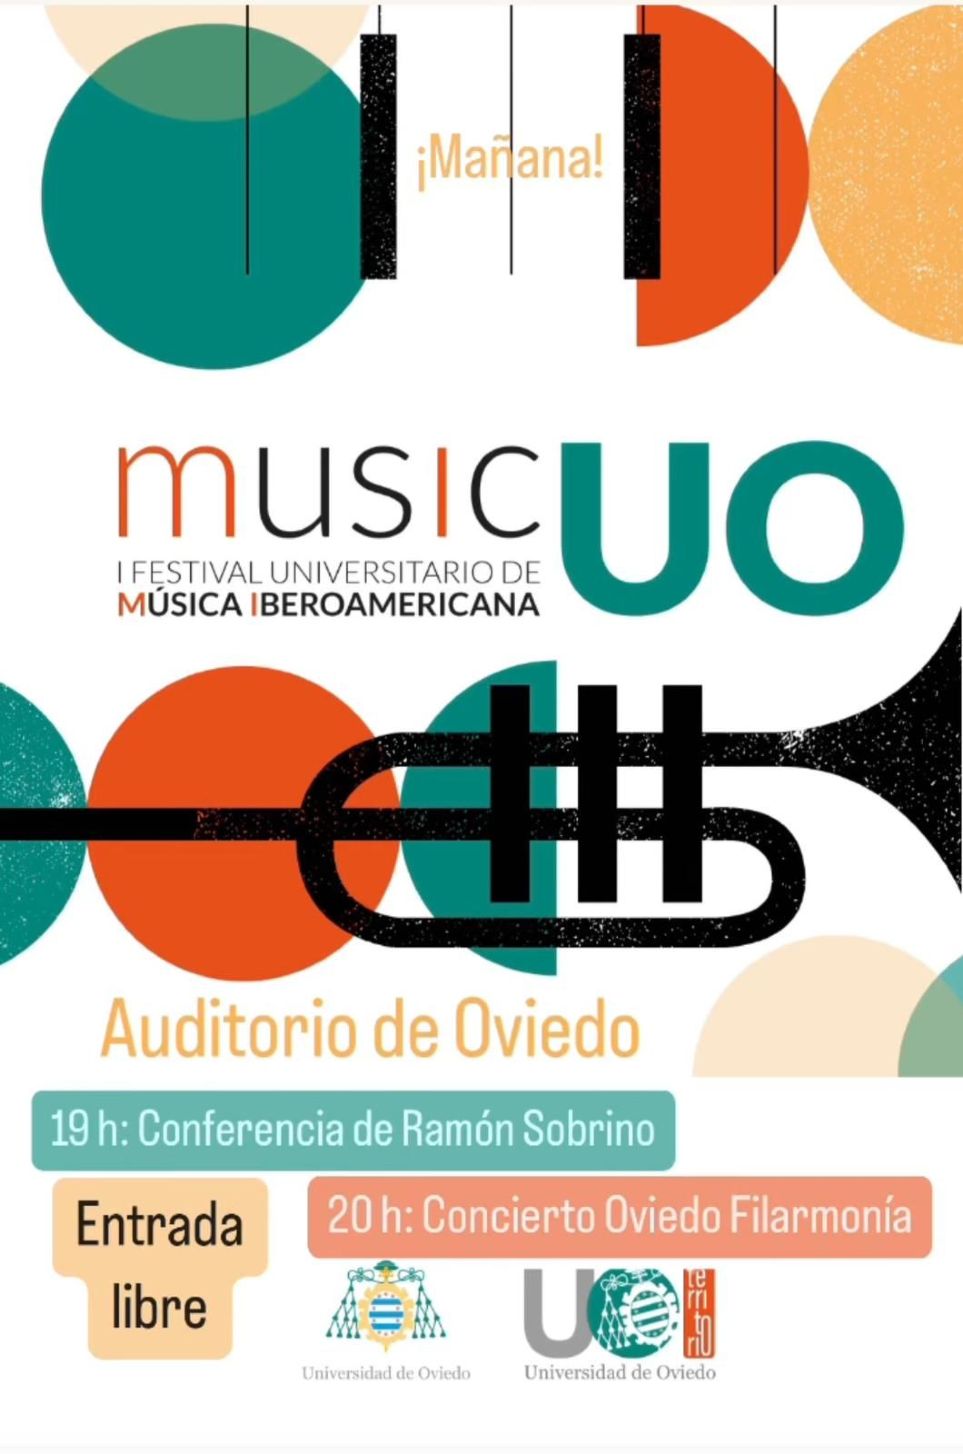 Festival Universitario de Msica Iberoamericana